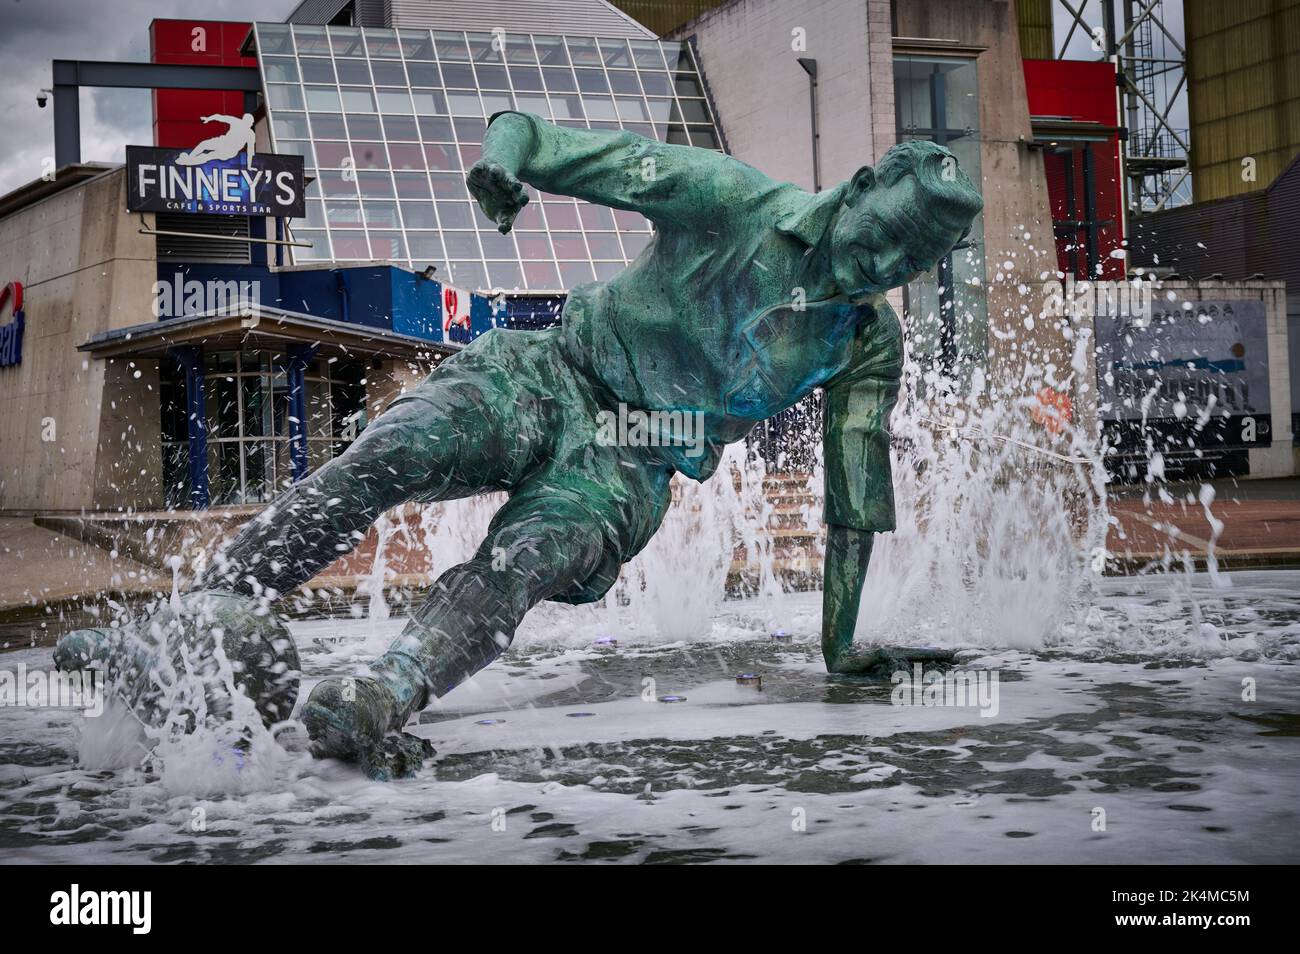 La estatua 'The Splash' con el jugador de Preston Tom Finney en pose famosa Foto de stock